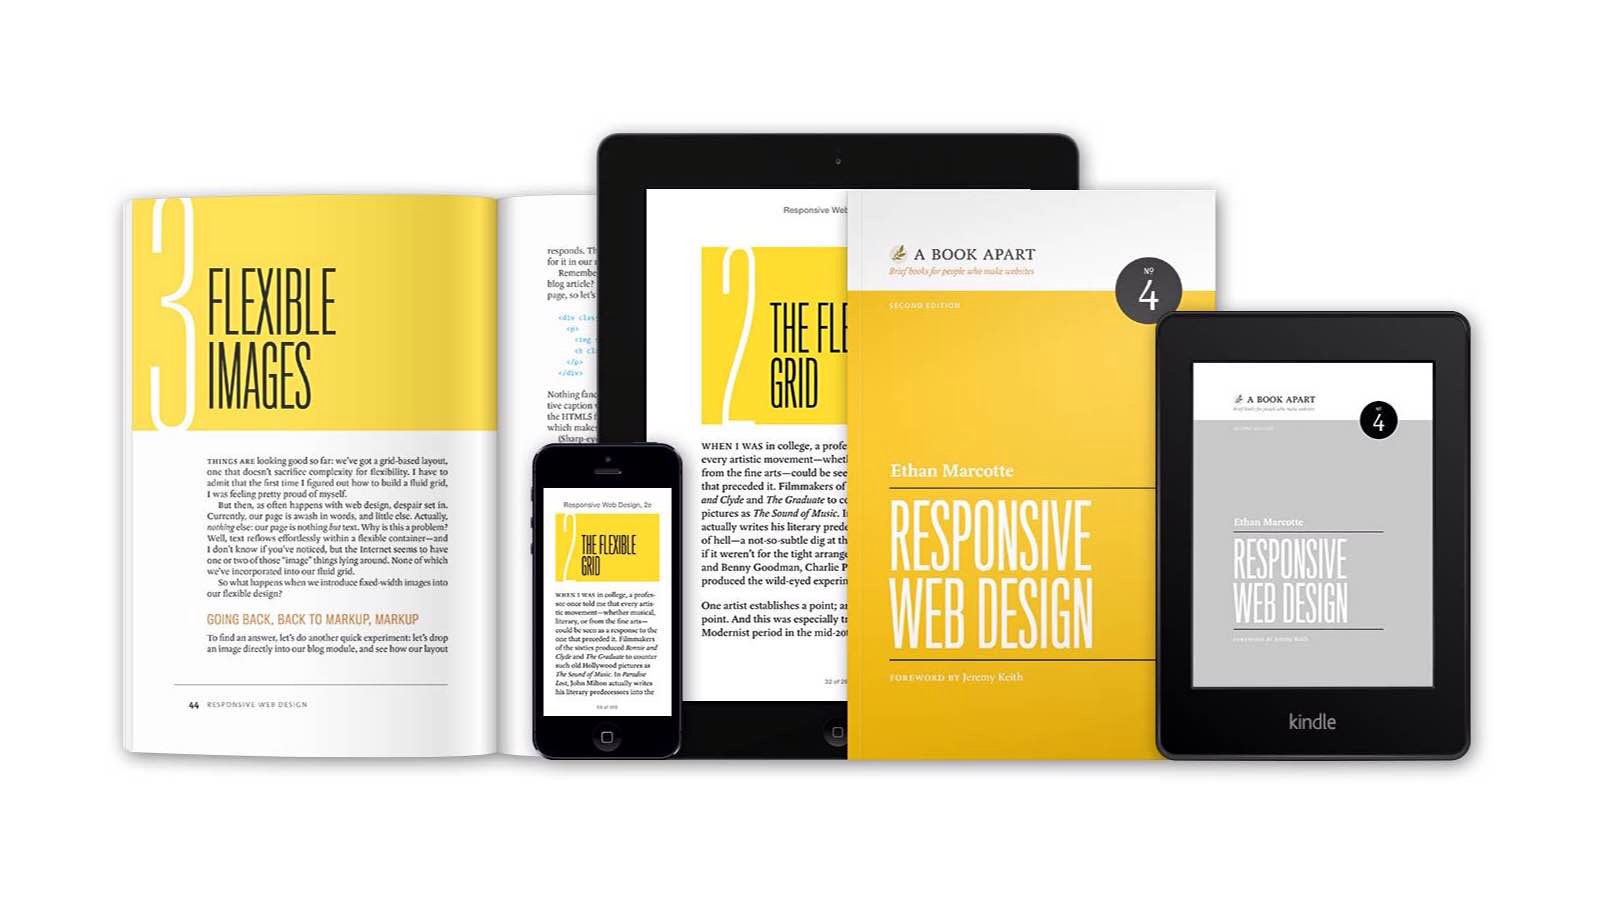 responsive-web-design-second-edition